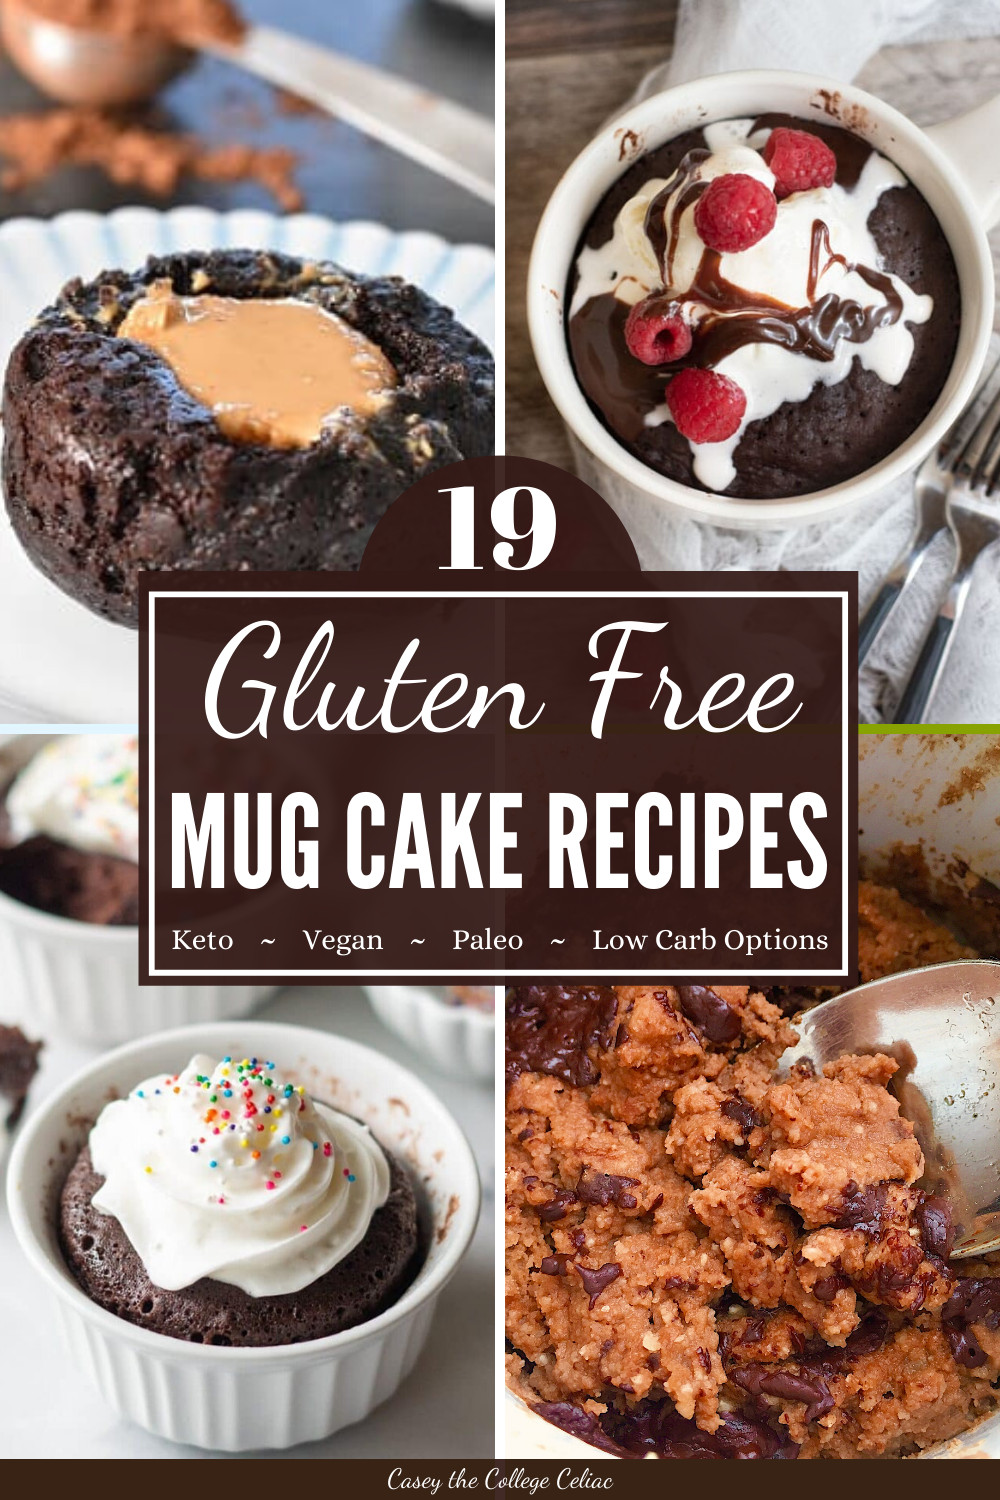 Gluten Free Valentine Day Recipes
 19 Gluten Free Mug Cake Recipes for Valentine s Day